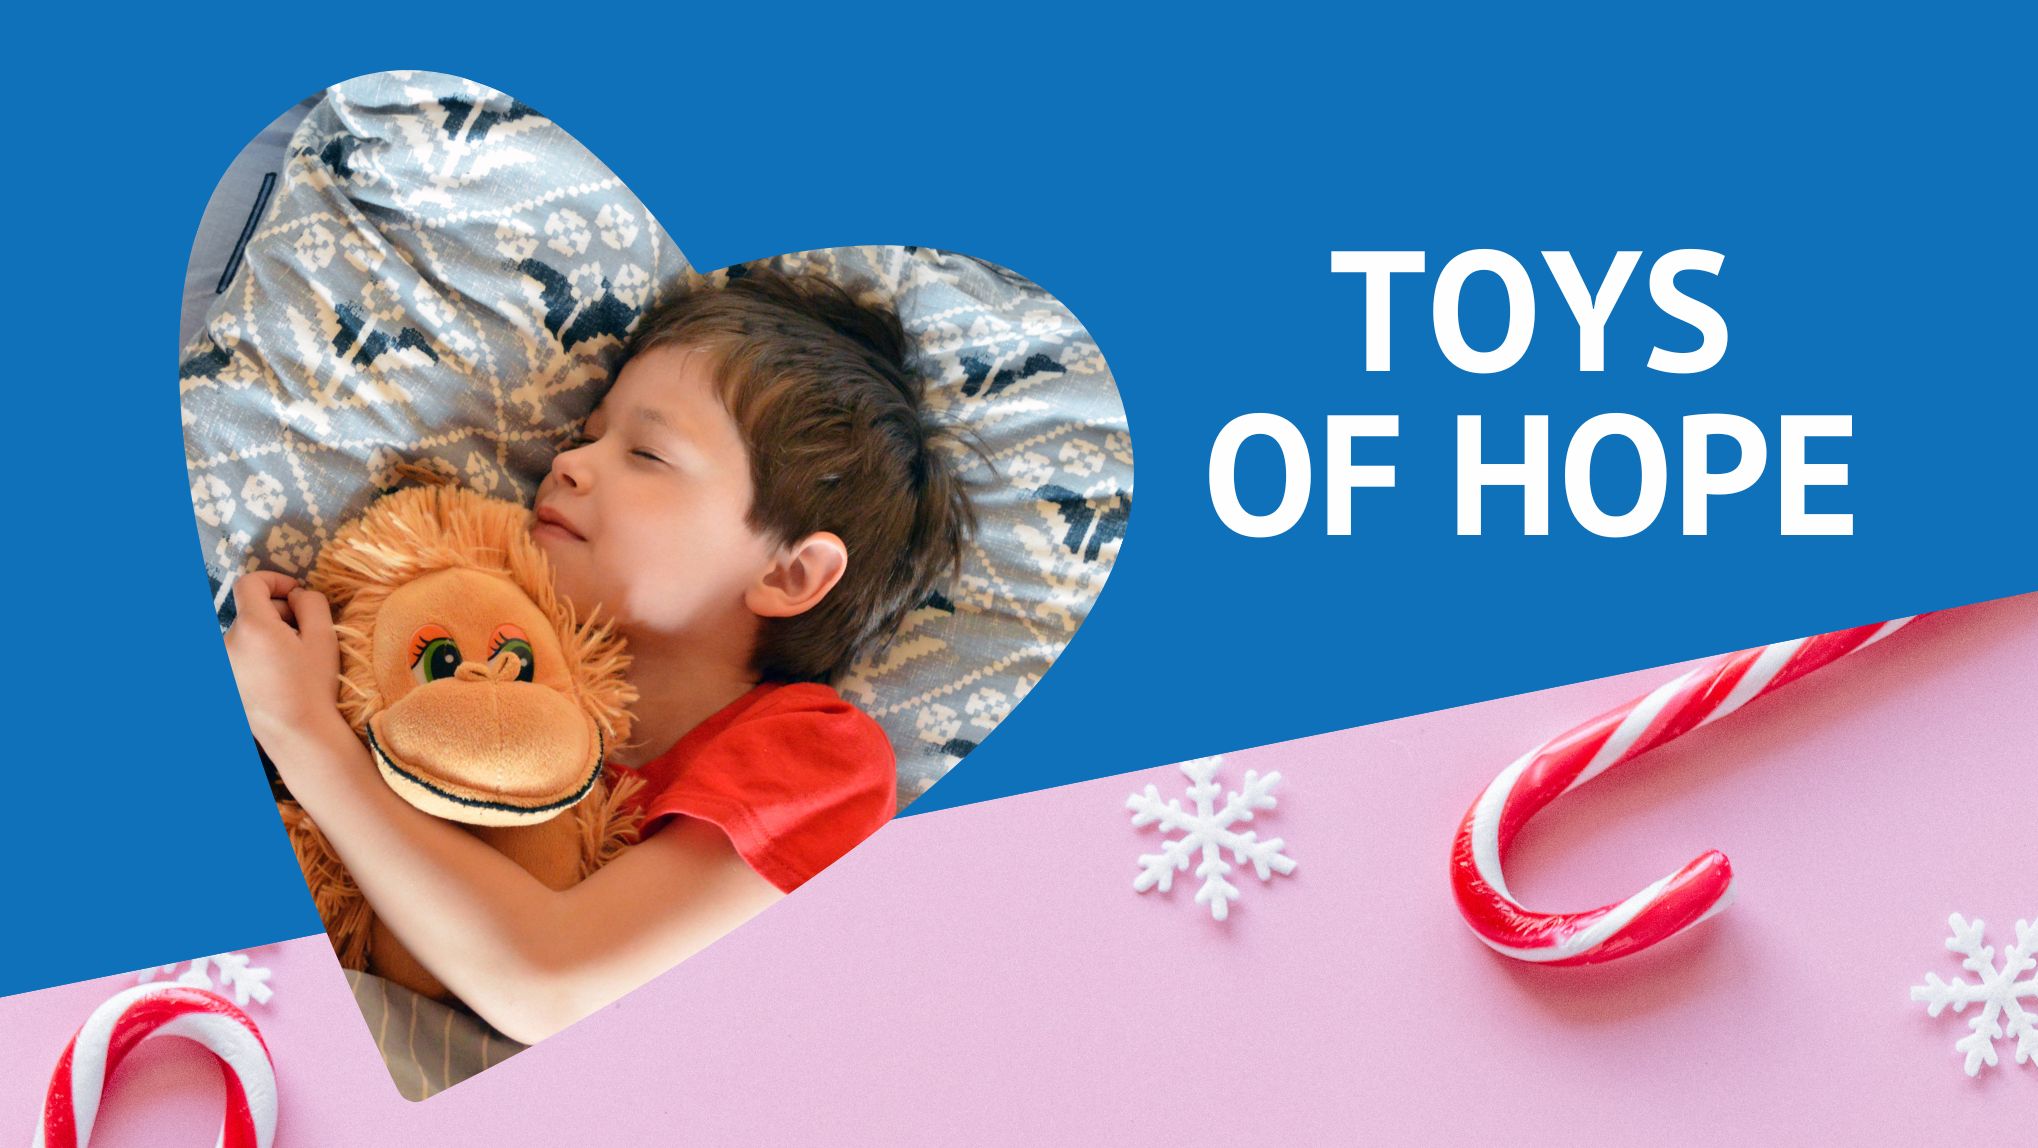 Toys of Hope Promotional Image